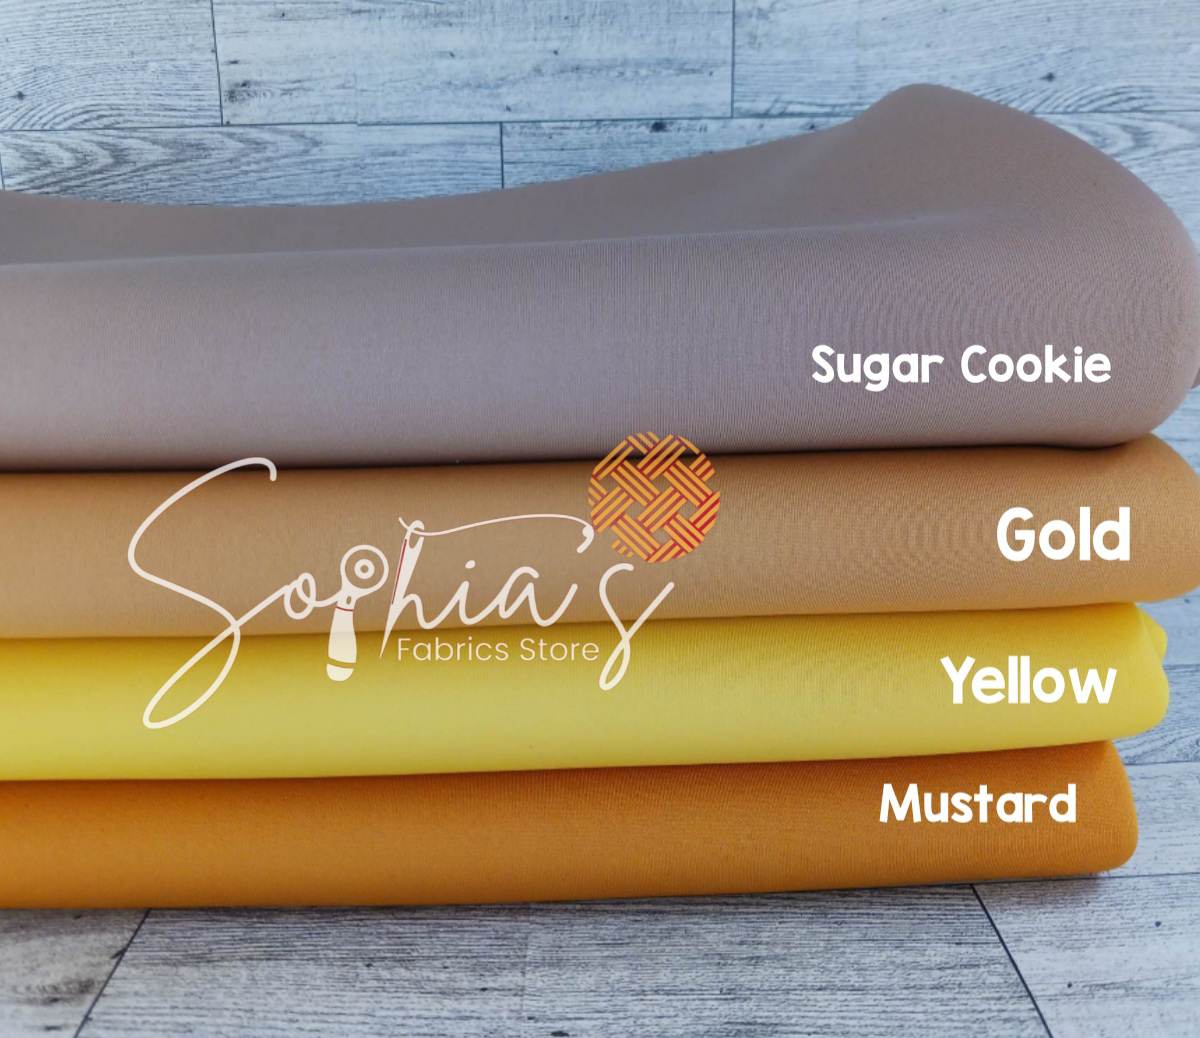 Black/Gold Sparkle Neoprene Scuba Fabric fabric by the yard – Trap Fabricks